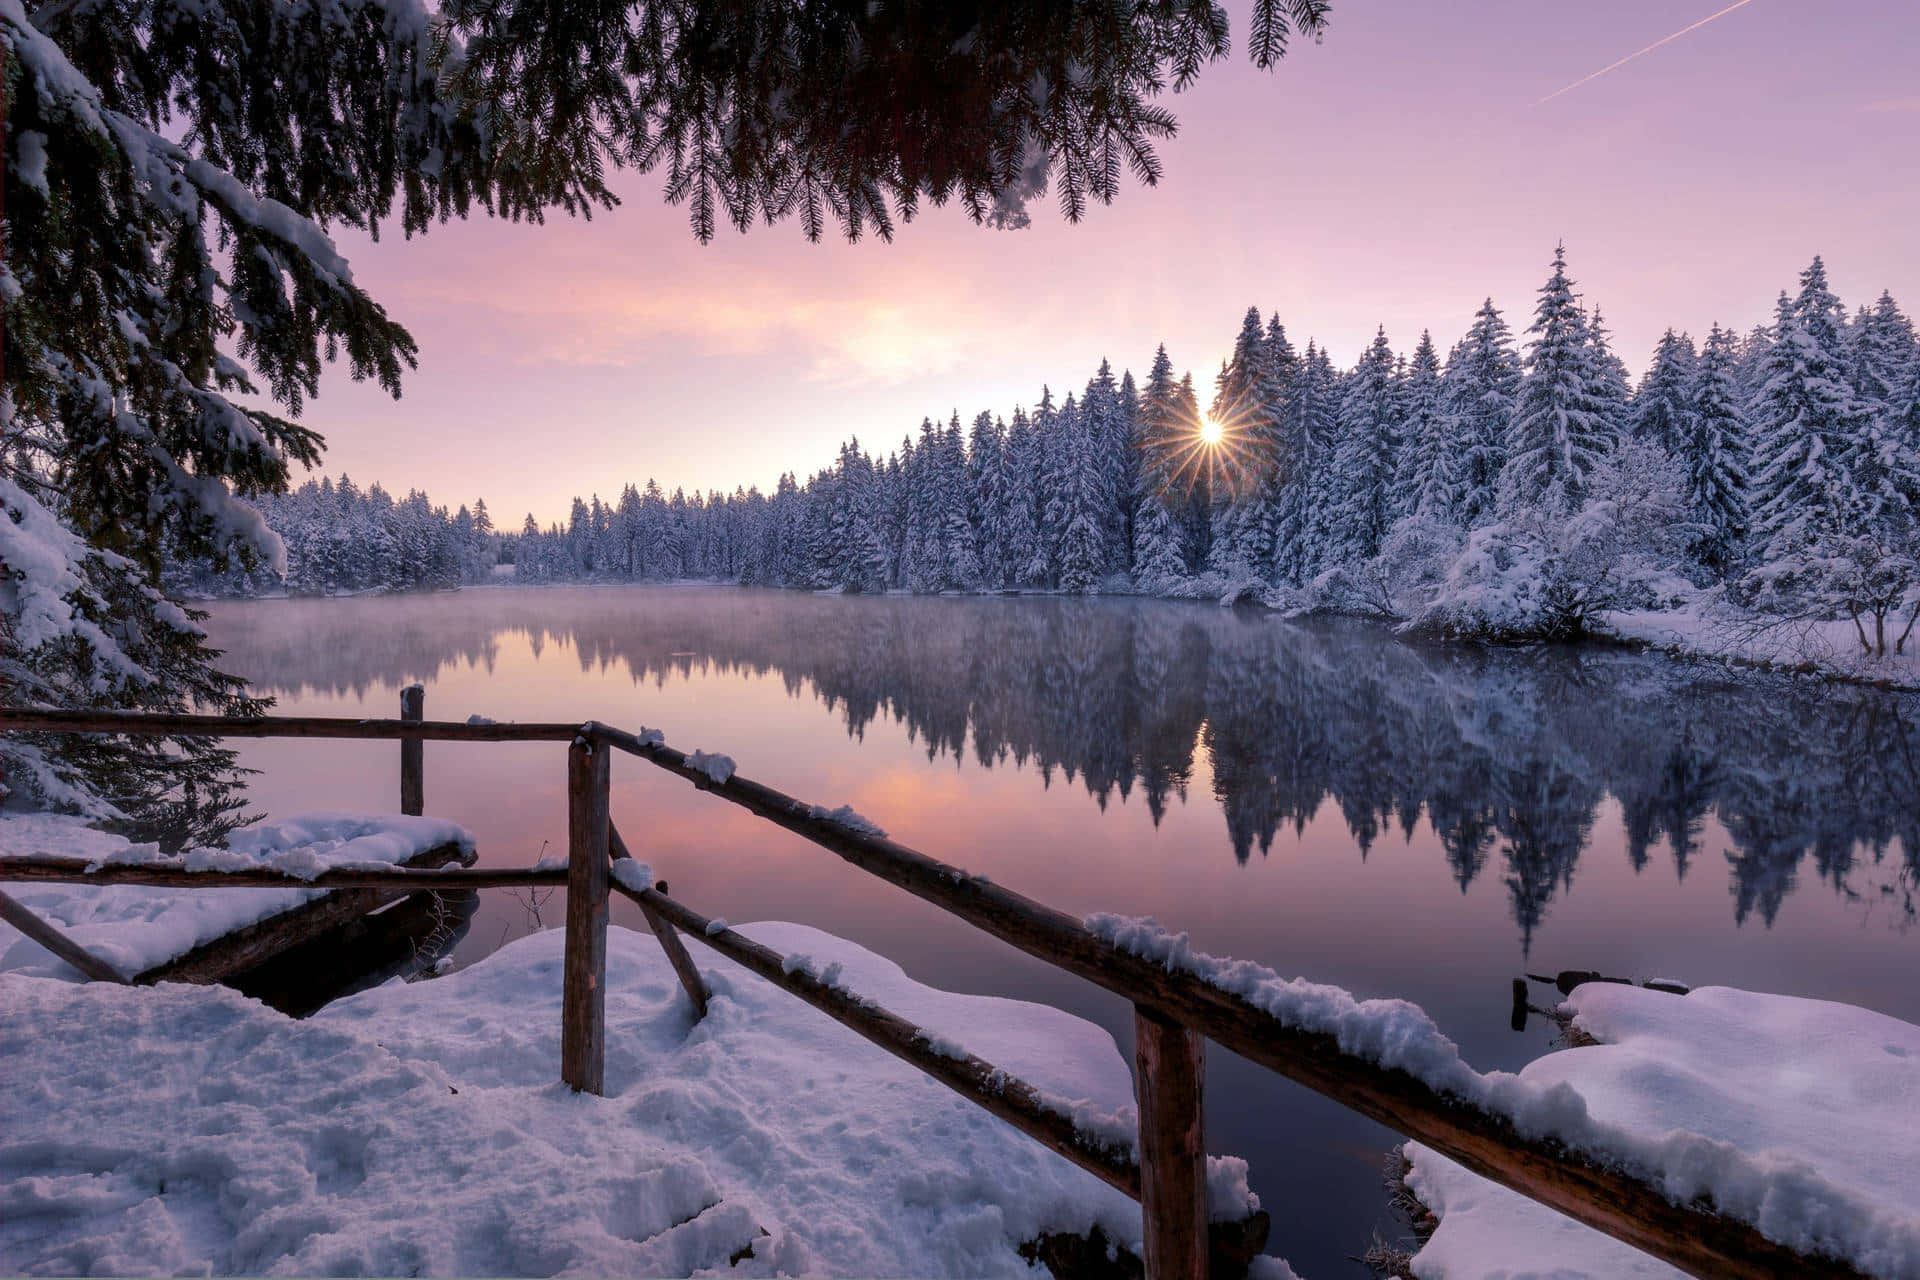 Serene Snowy Forest